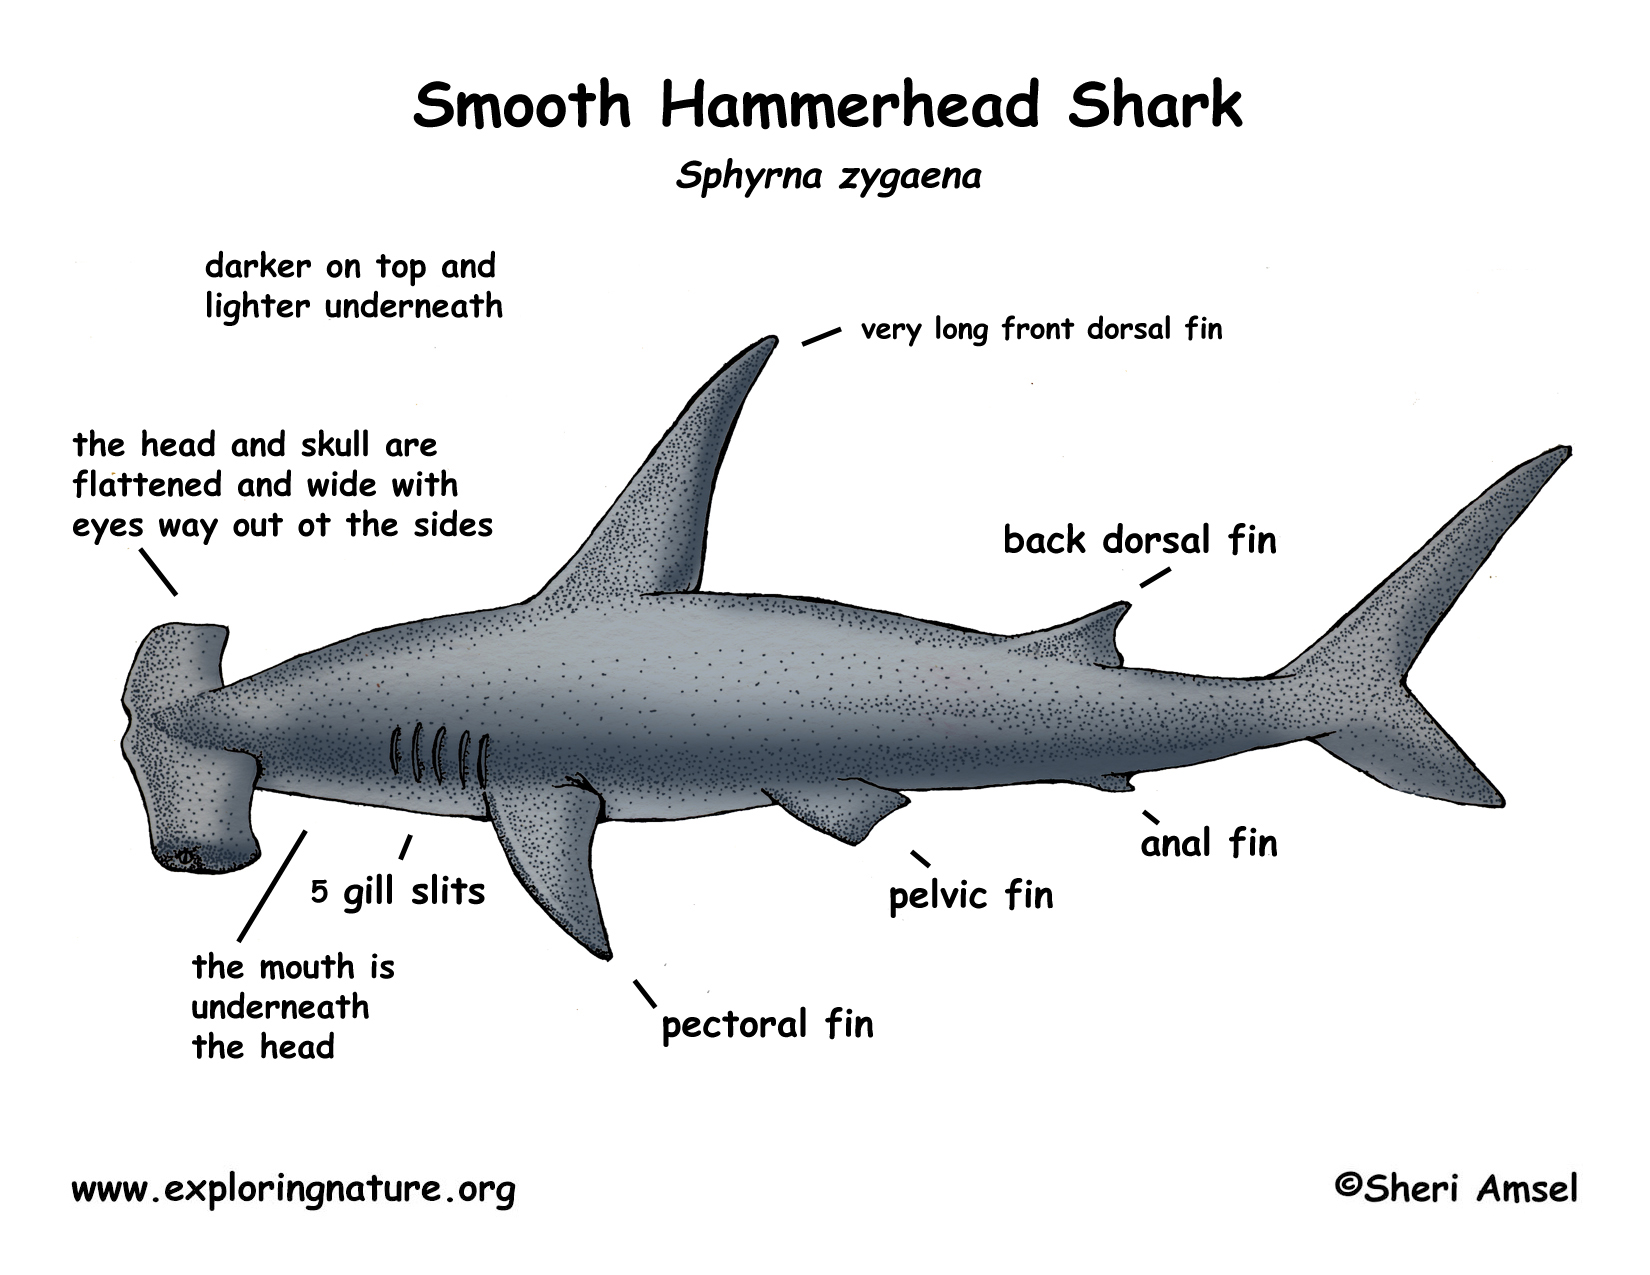 Shark Anatomy Model Labeled